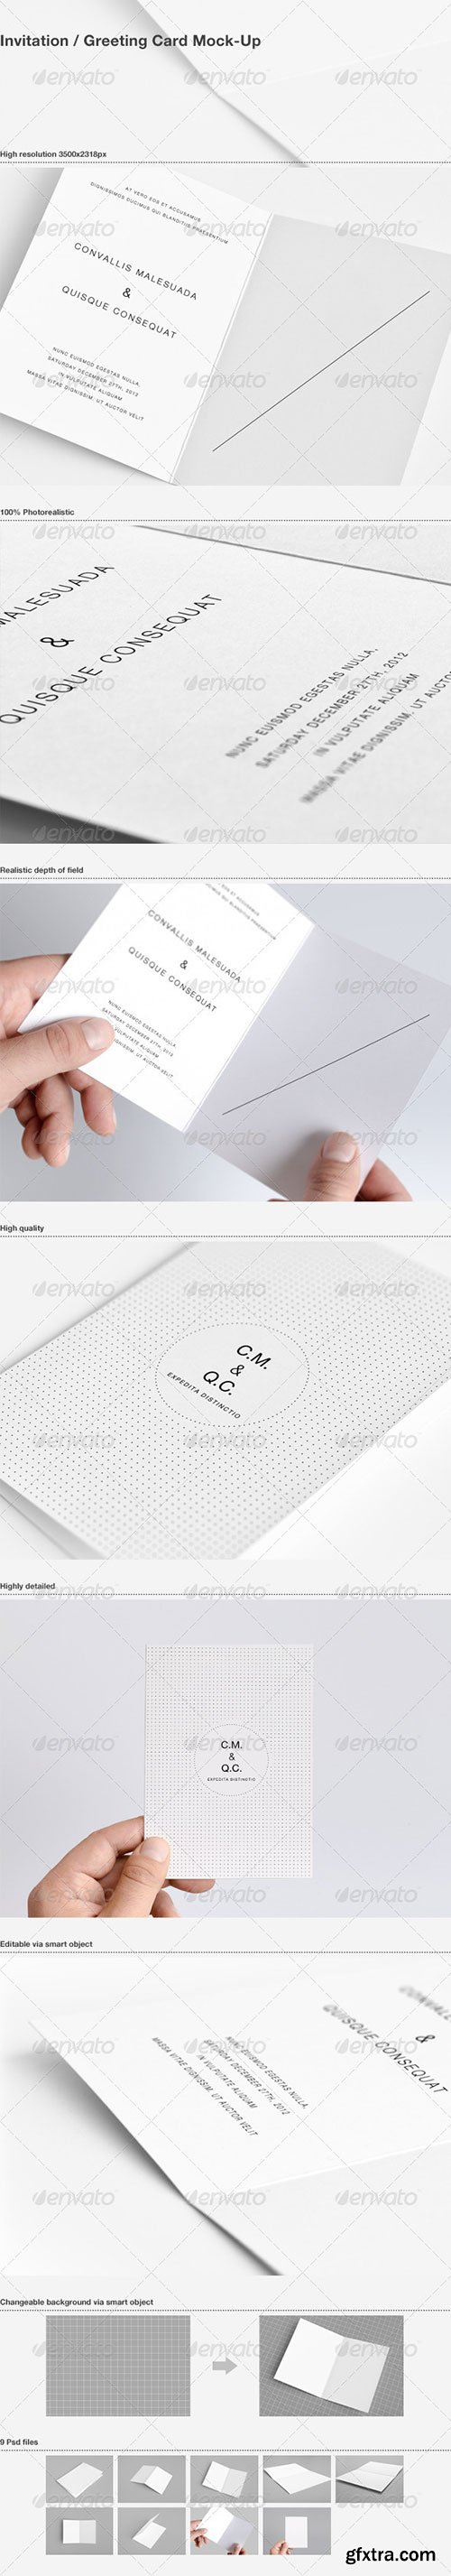 GraphicRiver - Invitation / Greeting Card Mock-Up 3601011